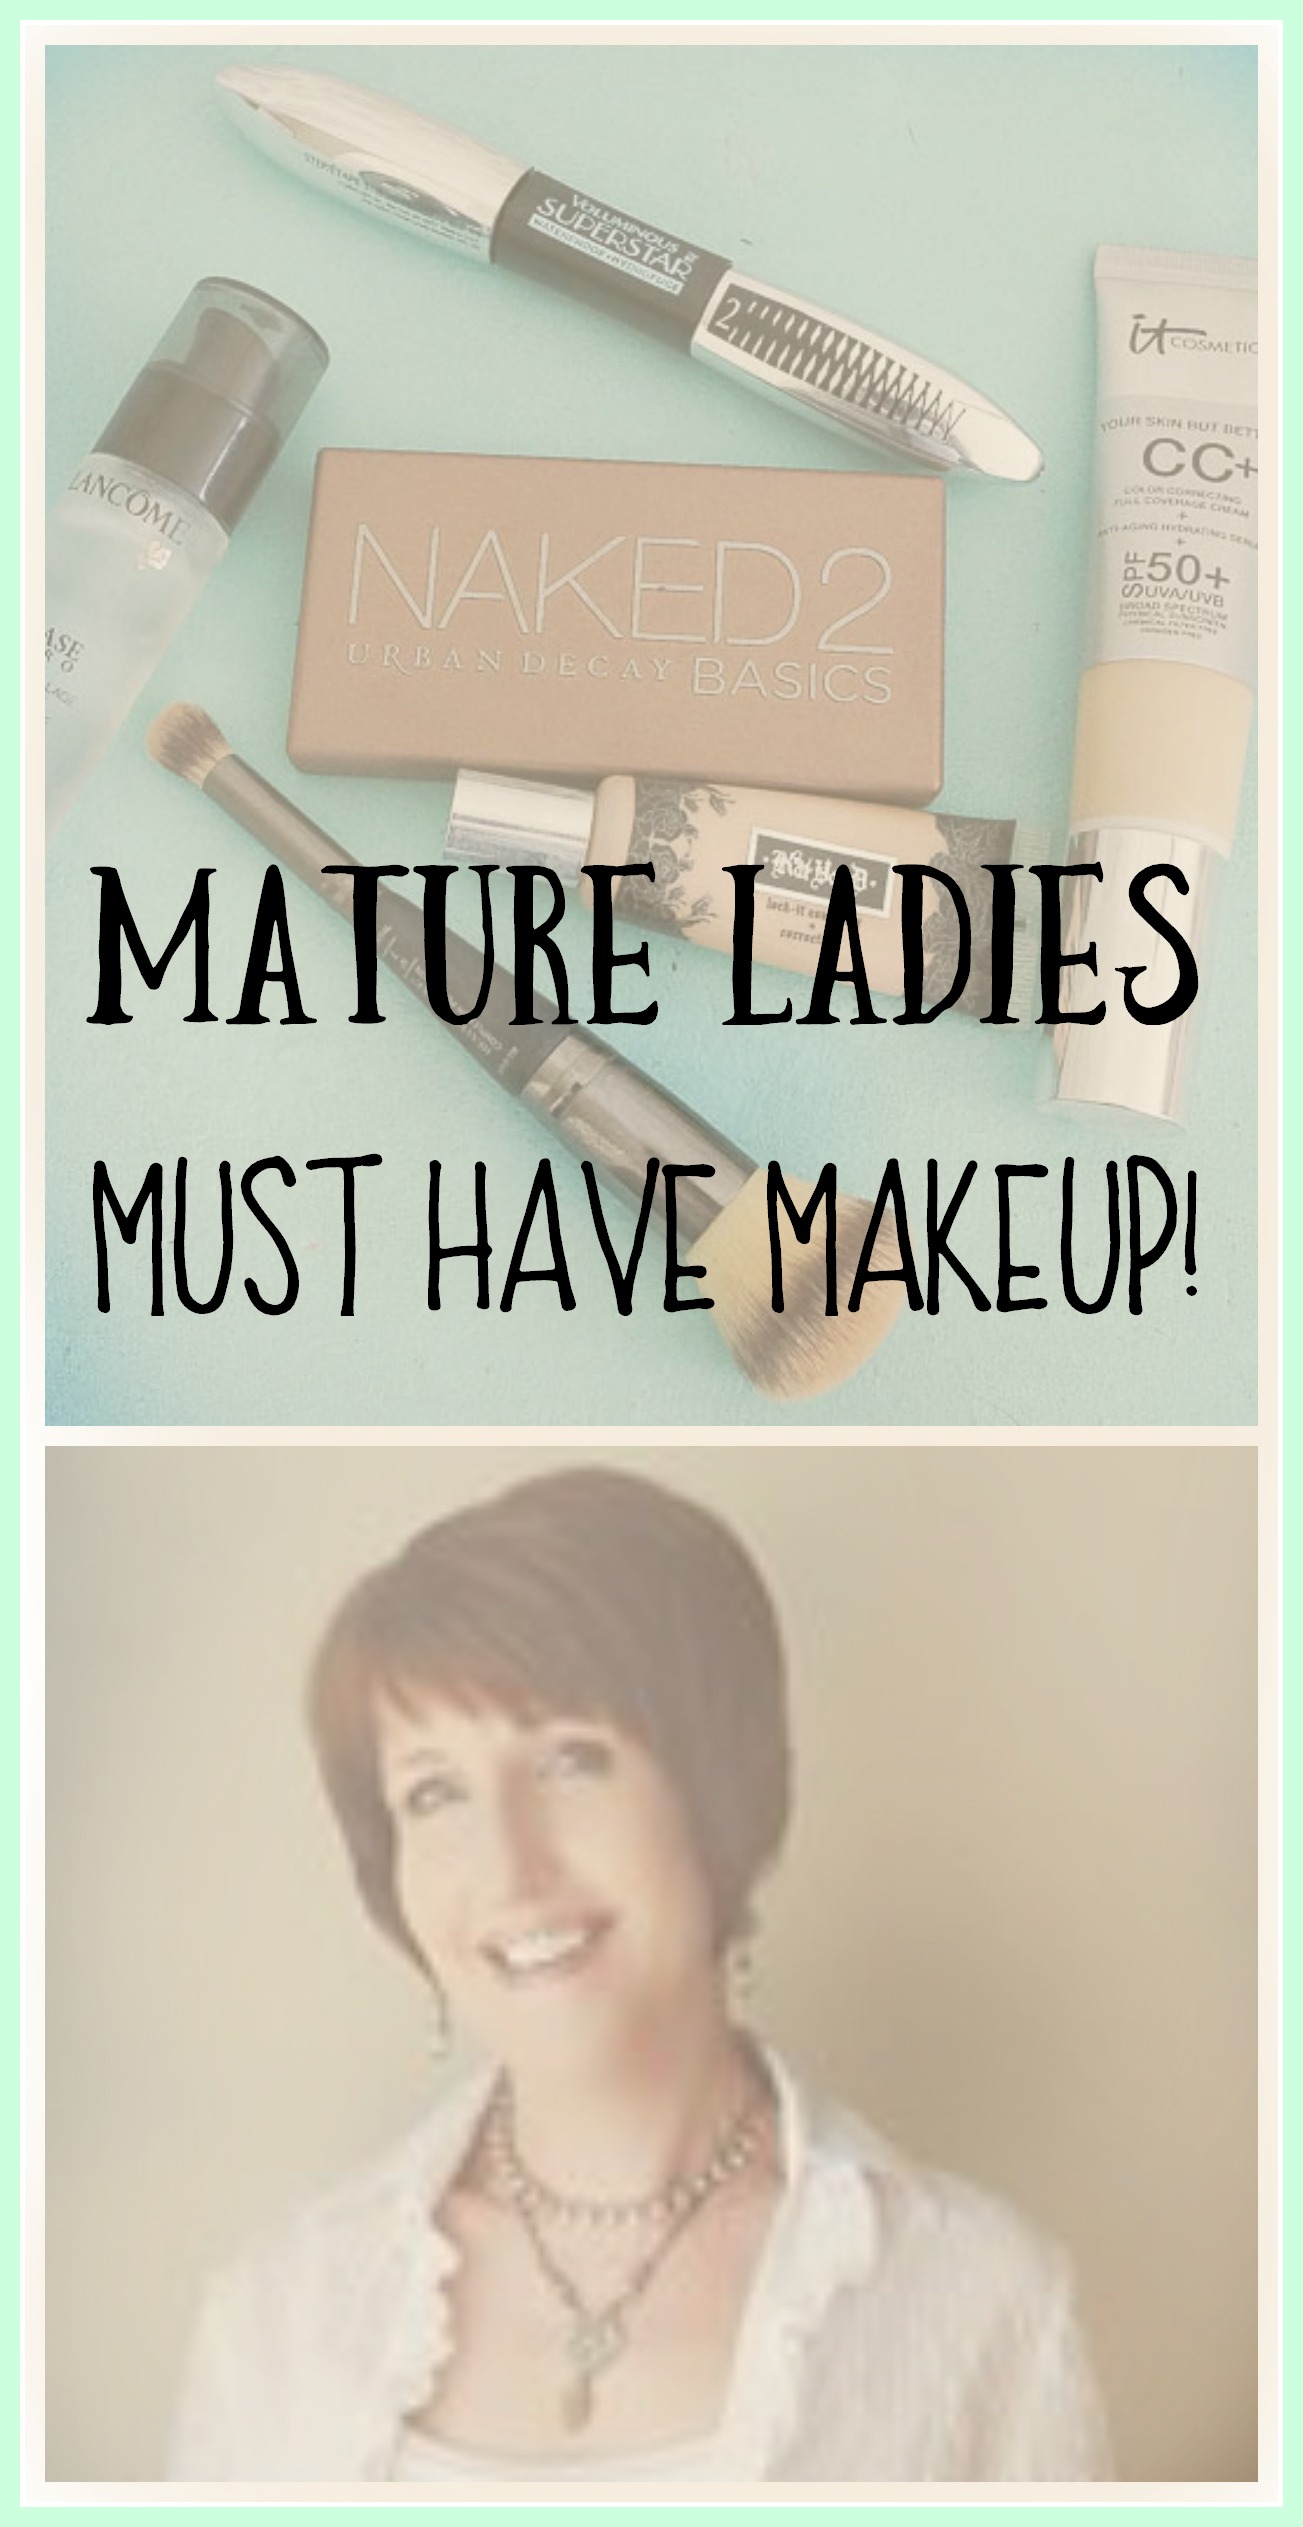 Mature ladies must have makeup!